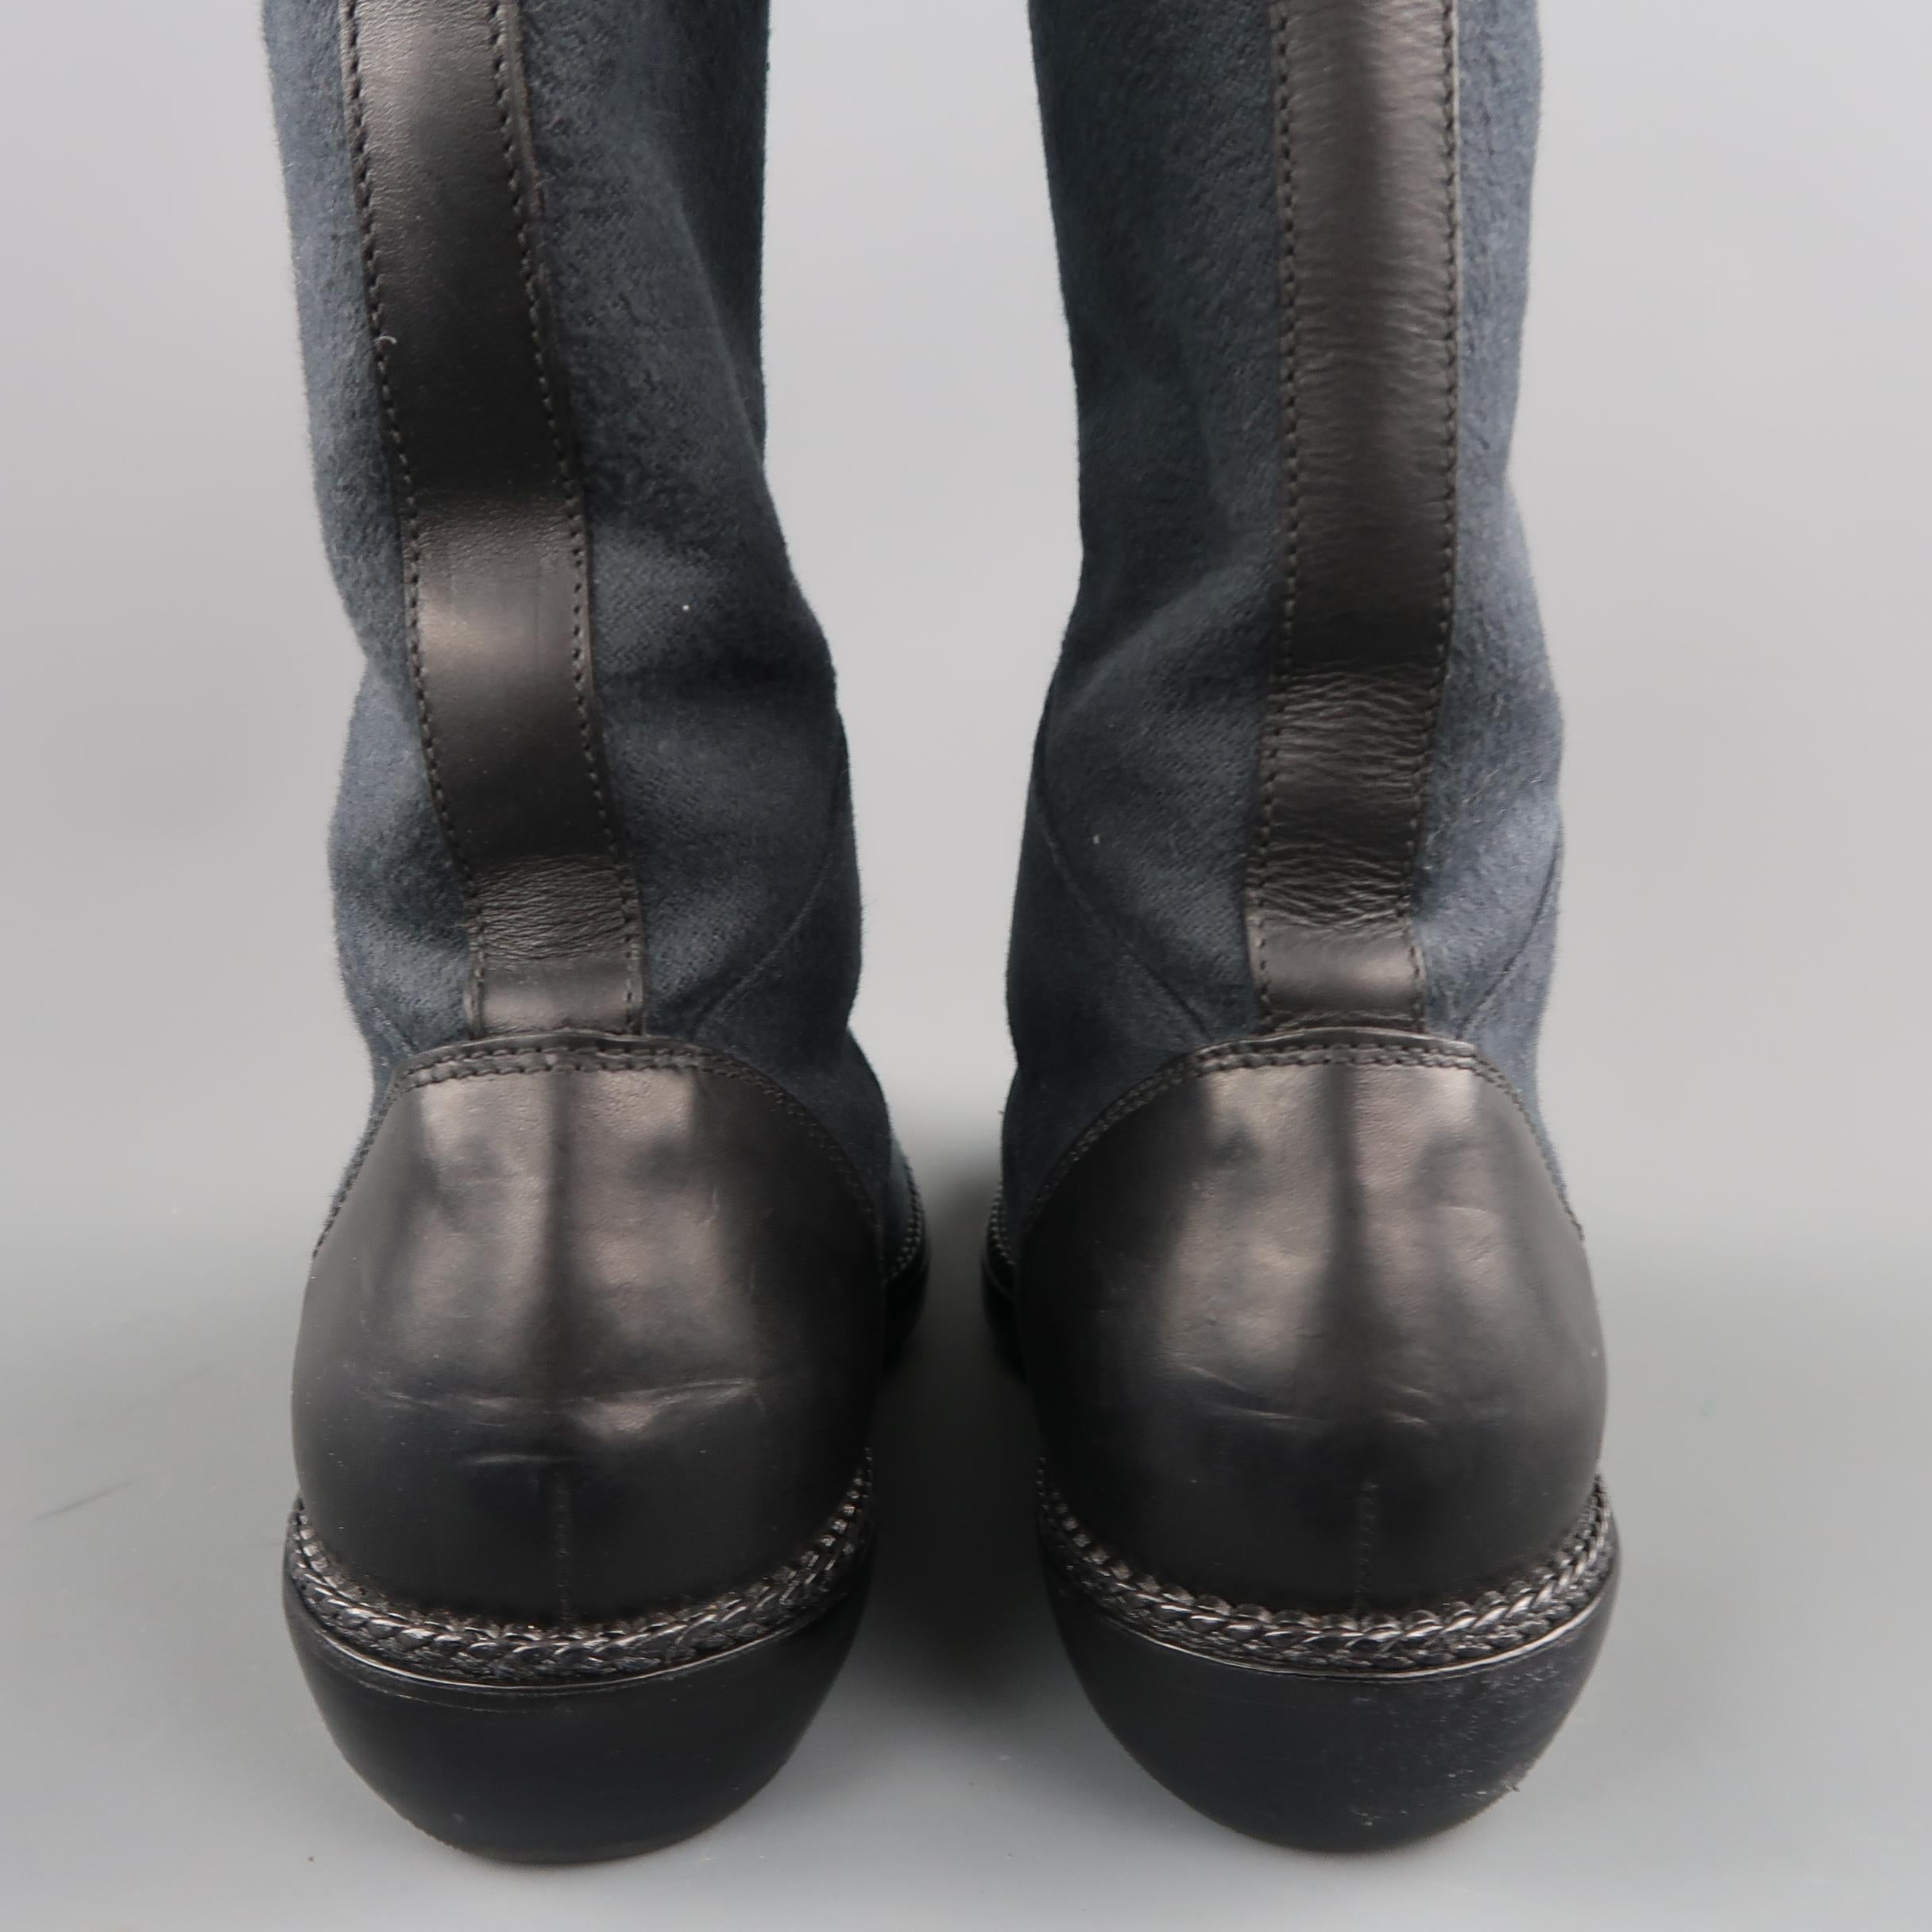 Men's LANVIN Size 9 Navy & Black Canvas & Leather Calf High Boots 3